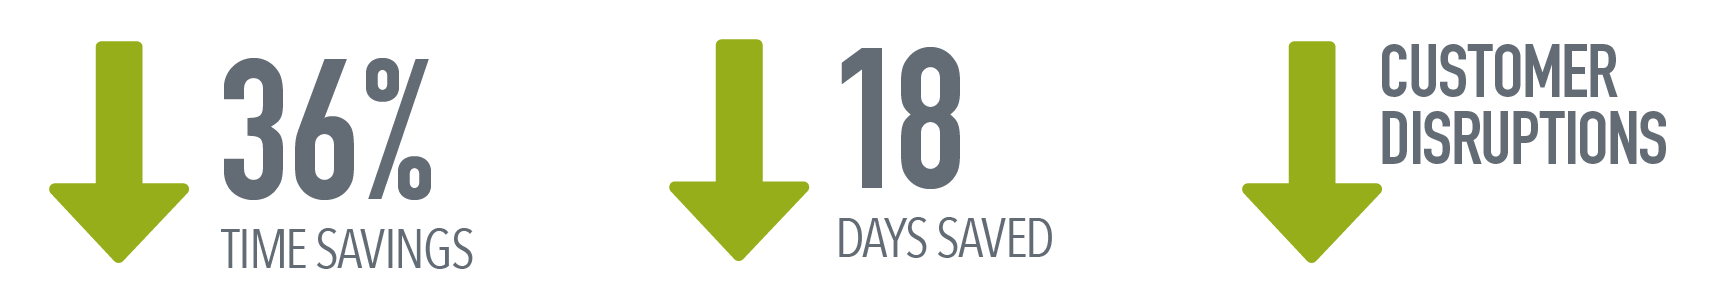 36% time savings, 18 days saved, lower customer disruptions